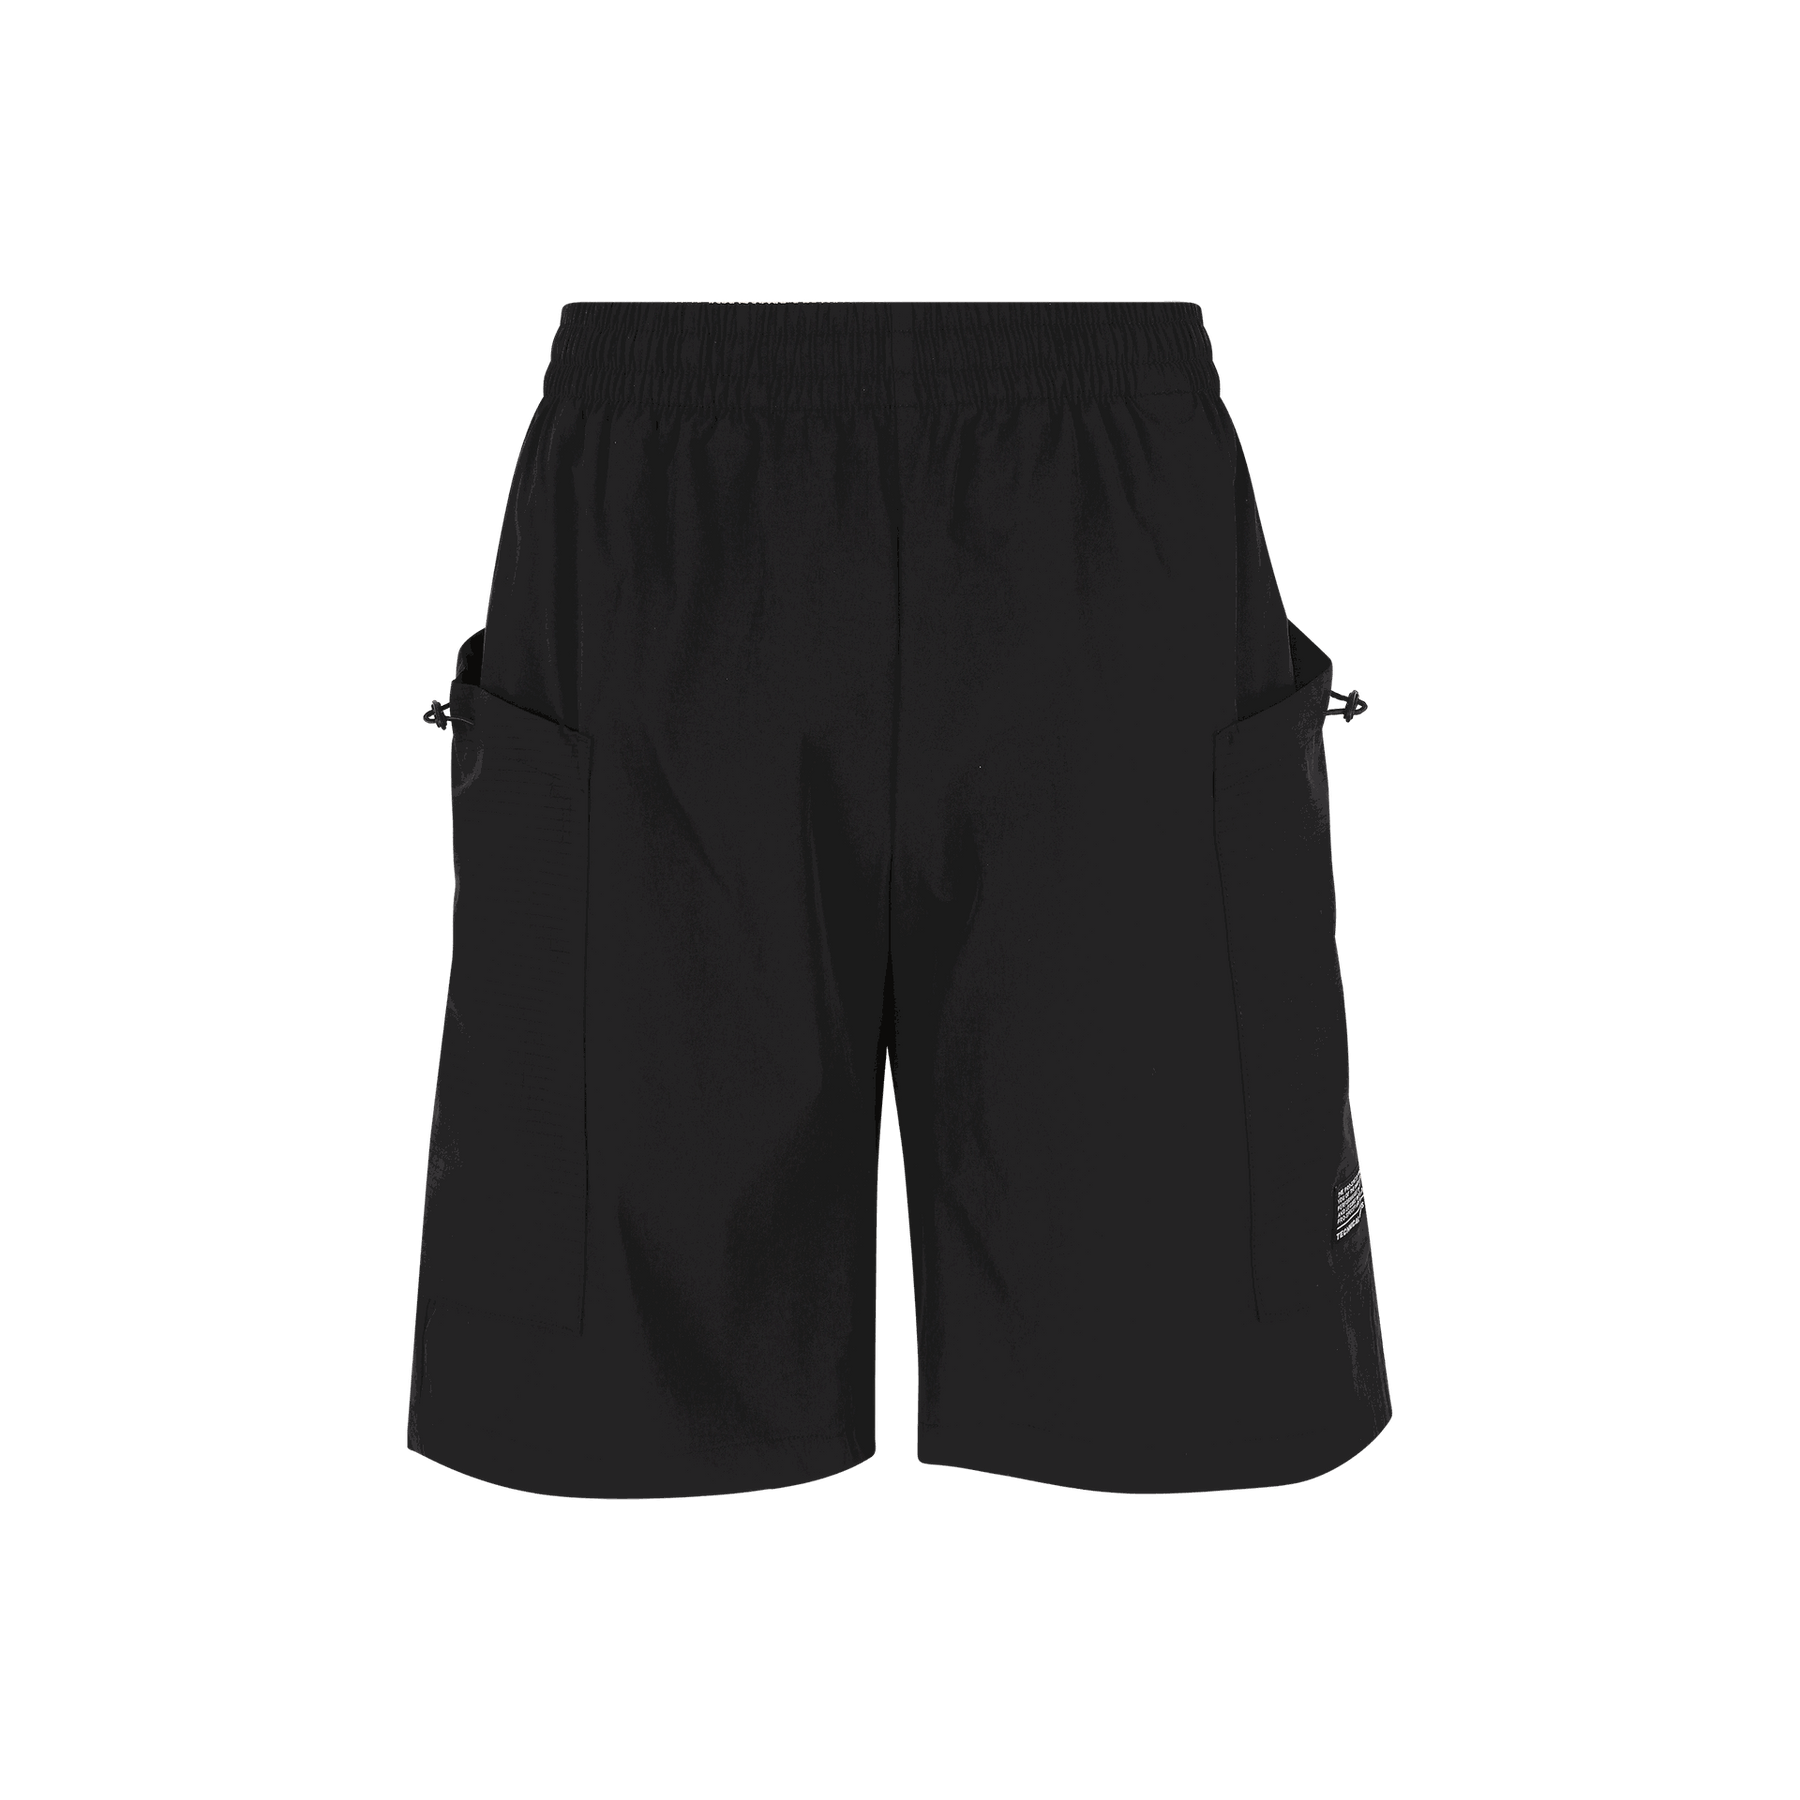 Quần thể thao PROSPECS Nam TM-Fill-up outer pocket 5-quarter shorts MH-M412